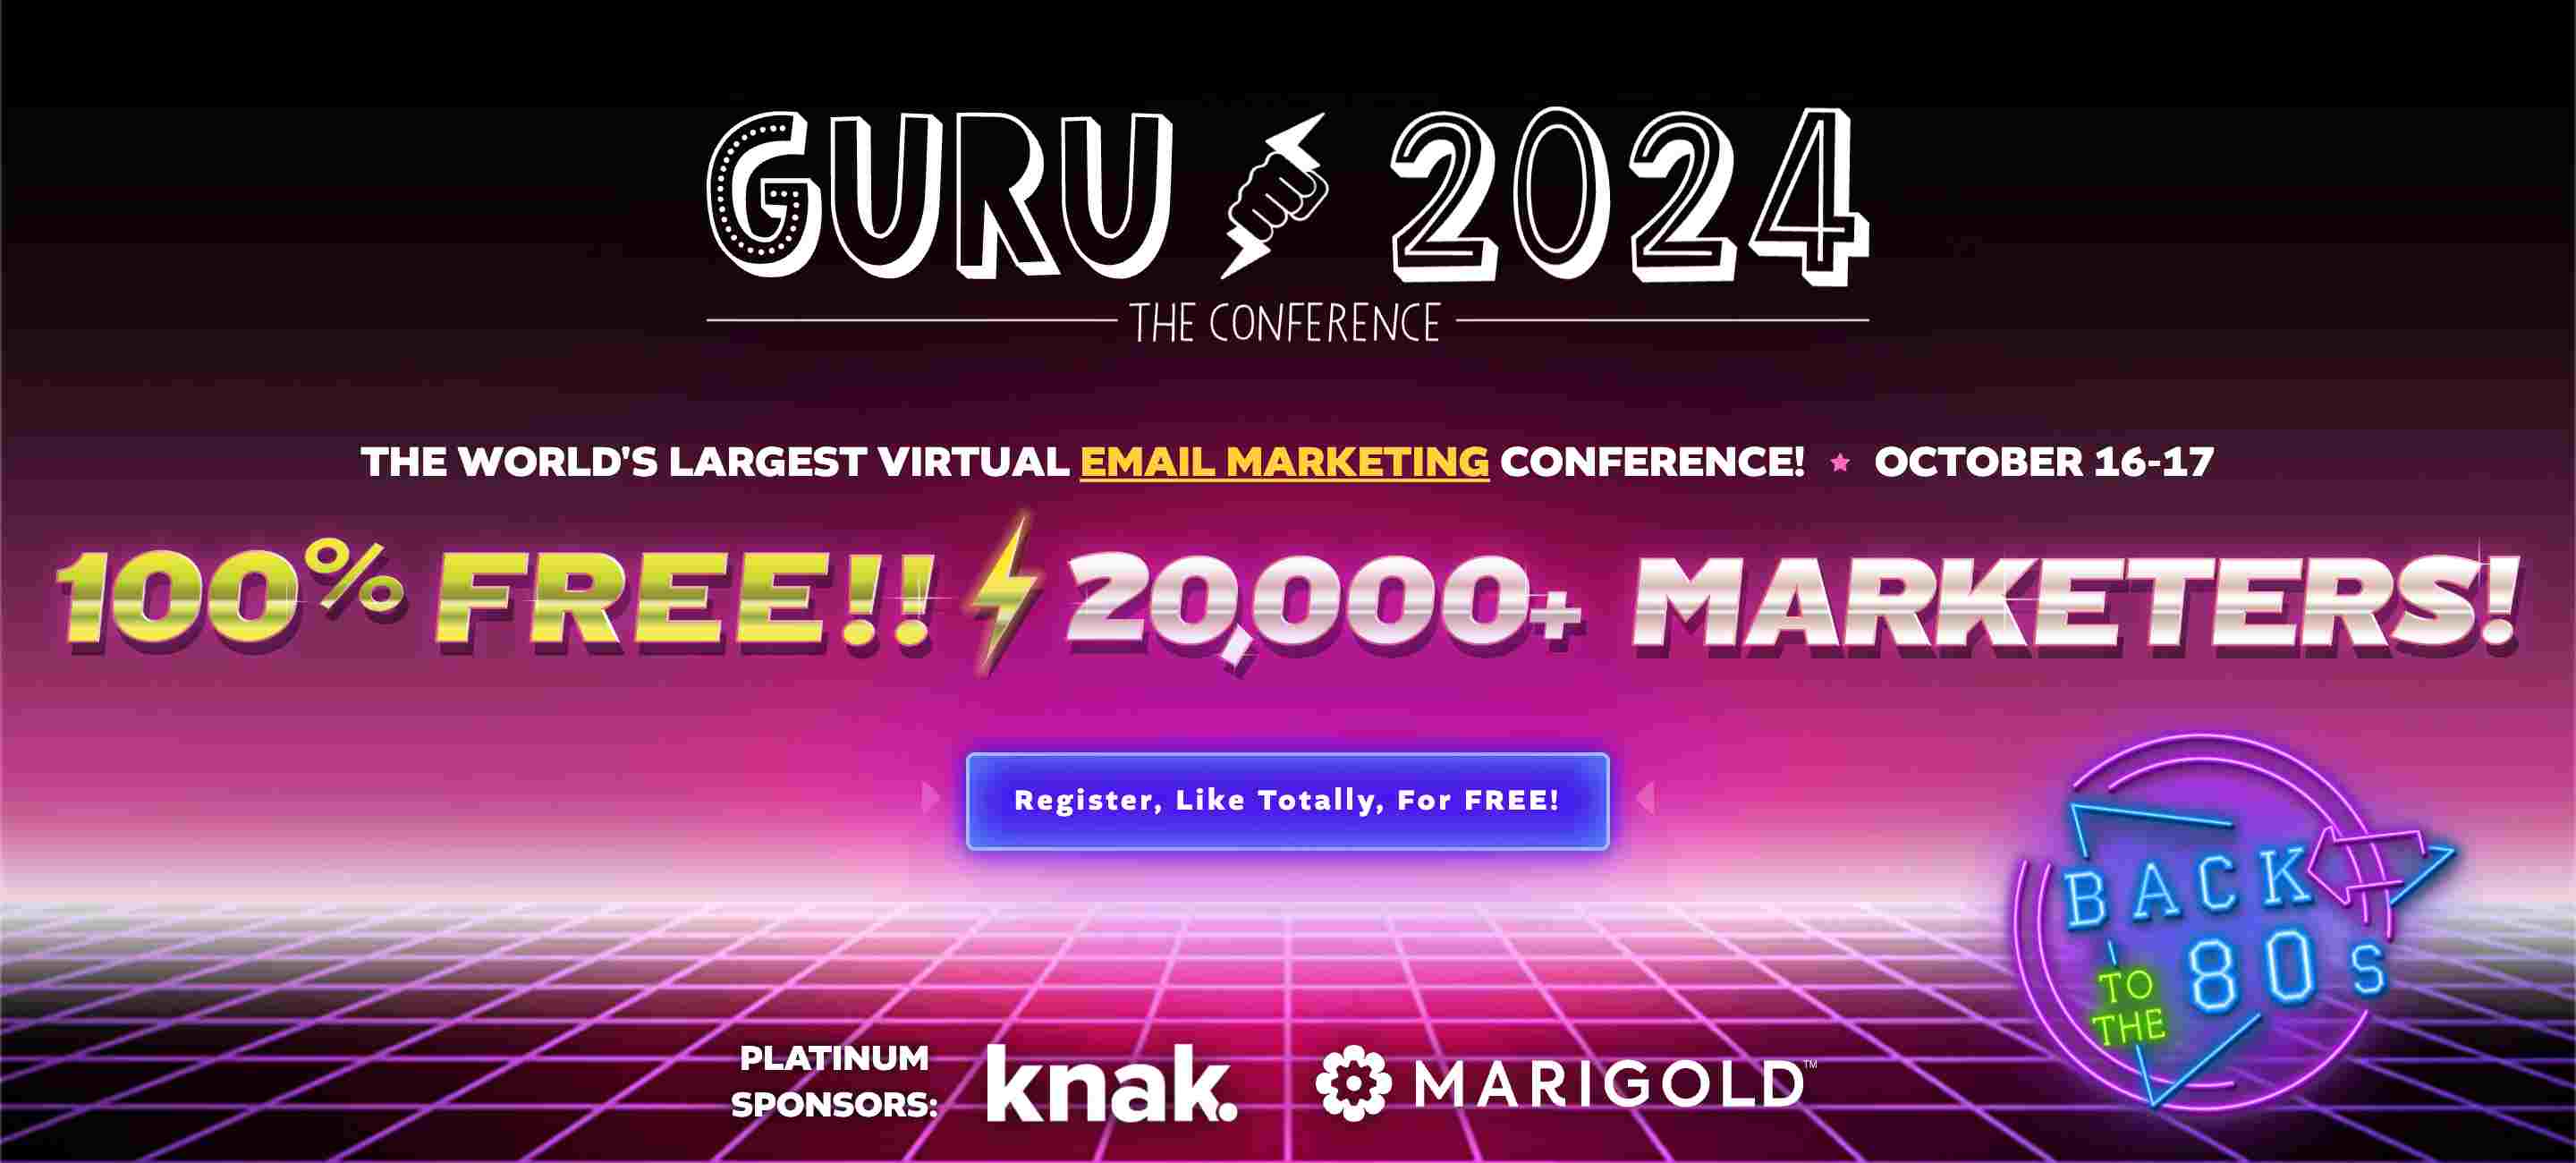 digital marketing conferences - Guru 2024